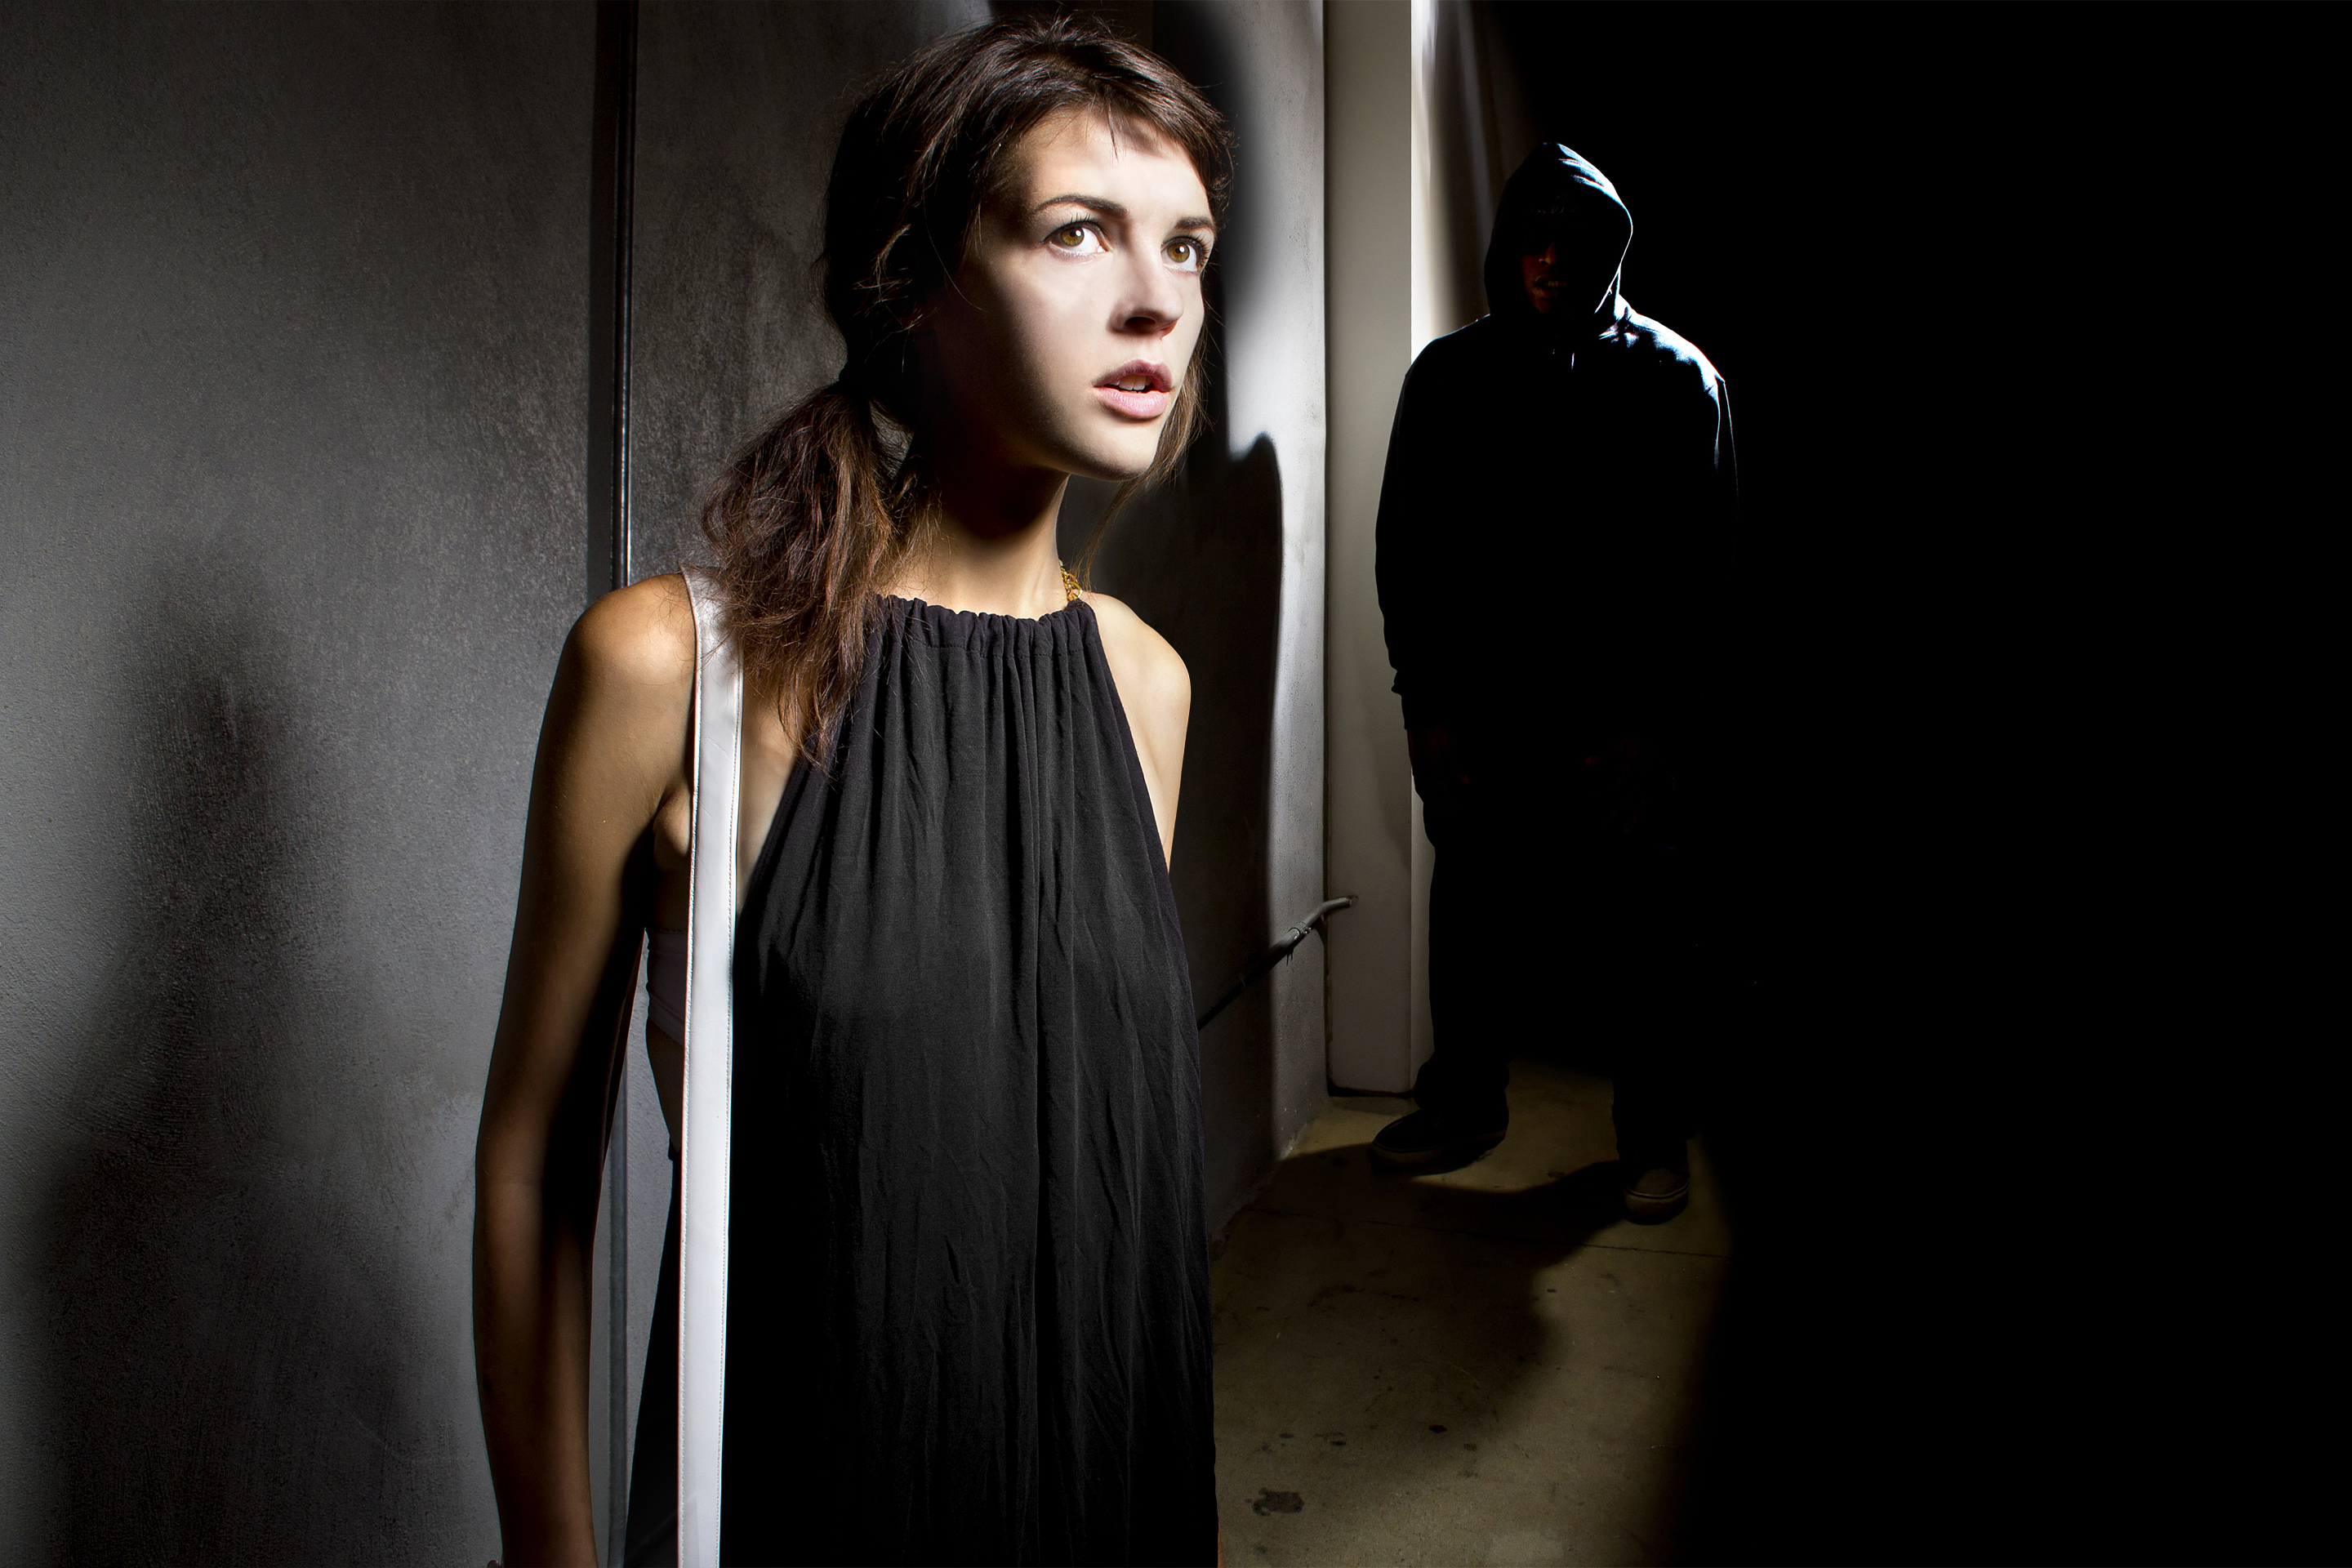 Woman In Danger at a Dark Alley